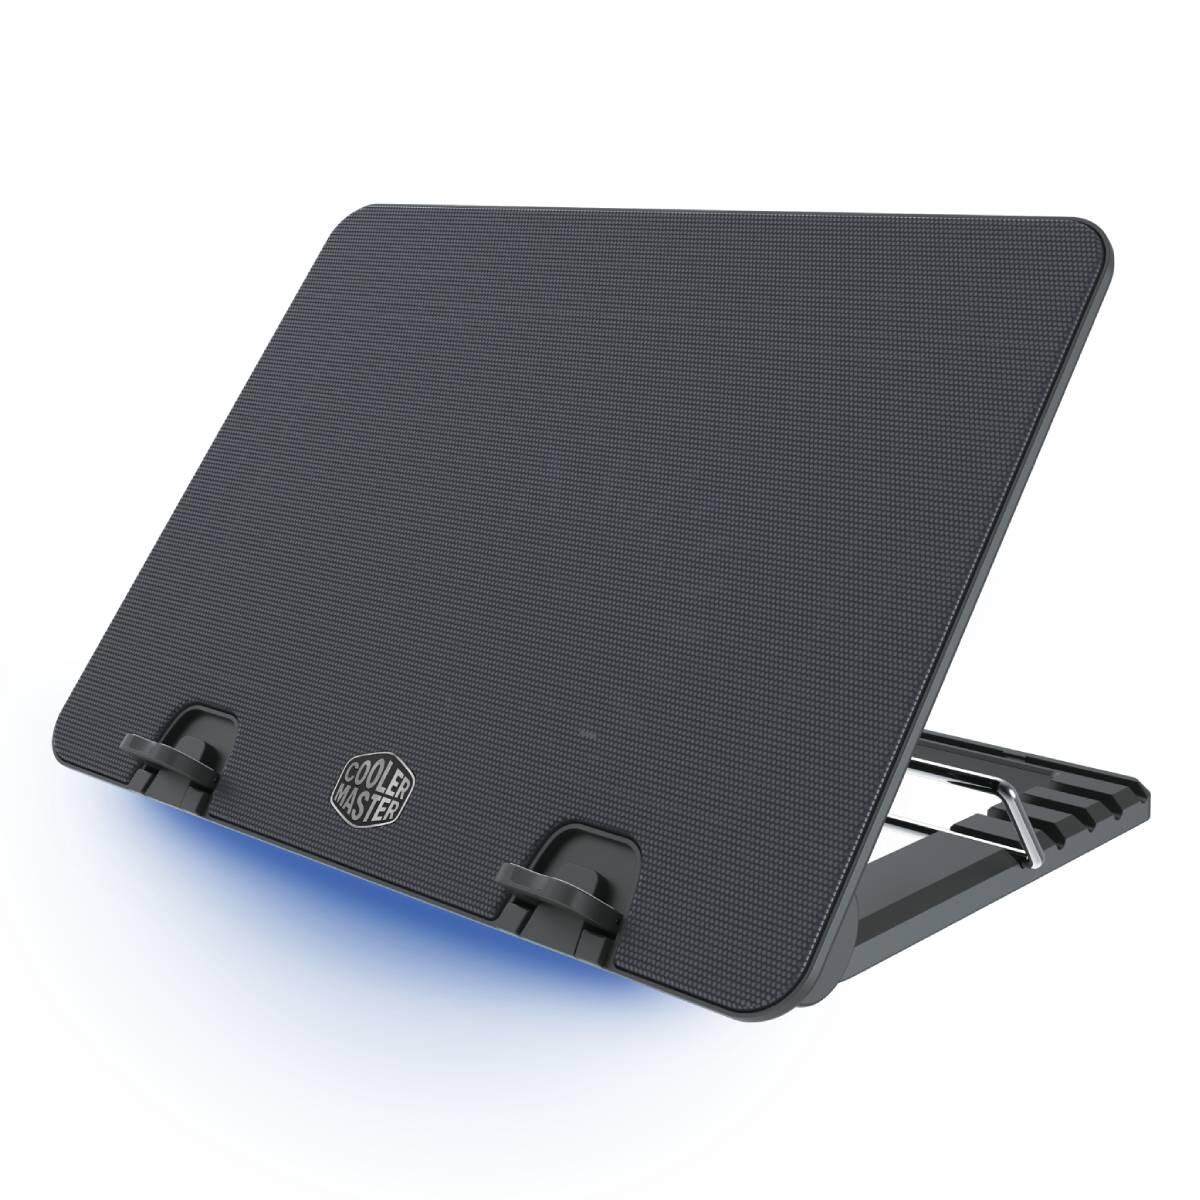 Cooler Master ERGOSTAND IV 140mm Silent Fan Height-Adjustable Ergonomic Mesh 4 USB 2.0 Notebook Cooler for up to 17